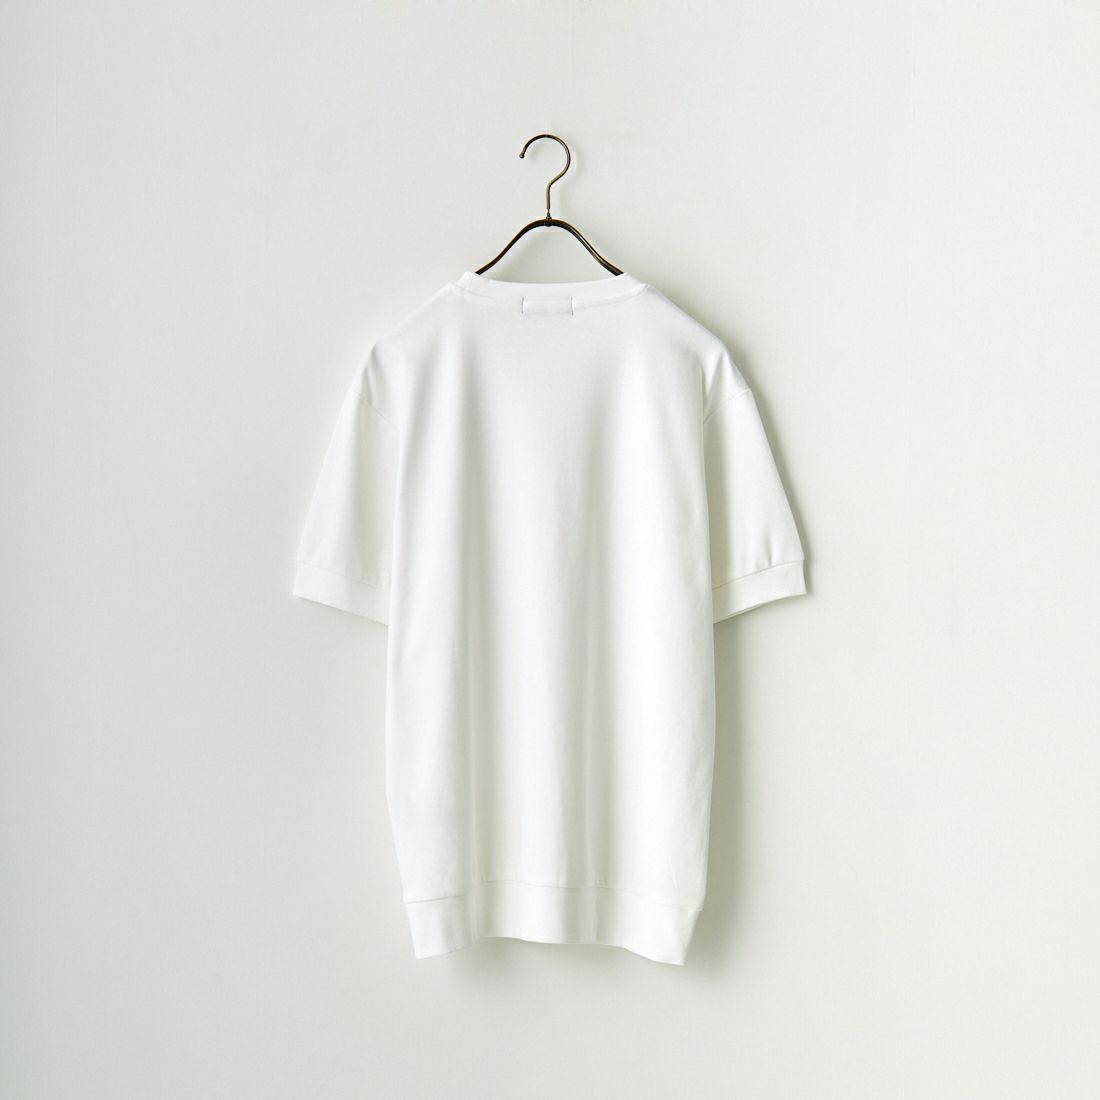 Jeans Factory Clothes [ジーンズファクトリークローズ] シルケットスムースクルーネックTシャツ [23238029] 001 WHITE